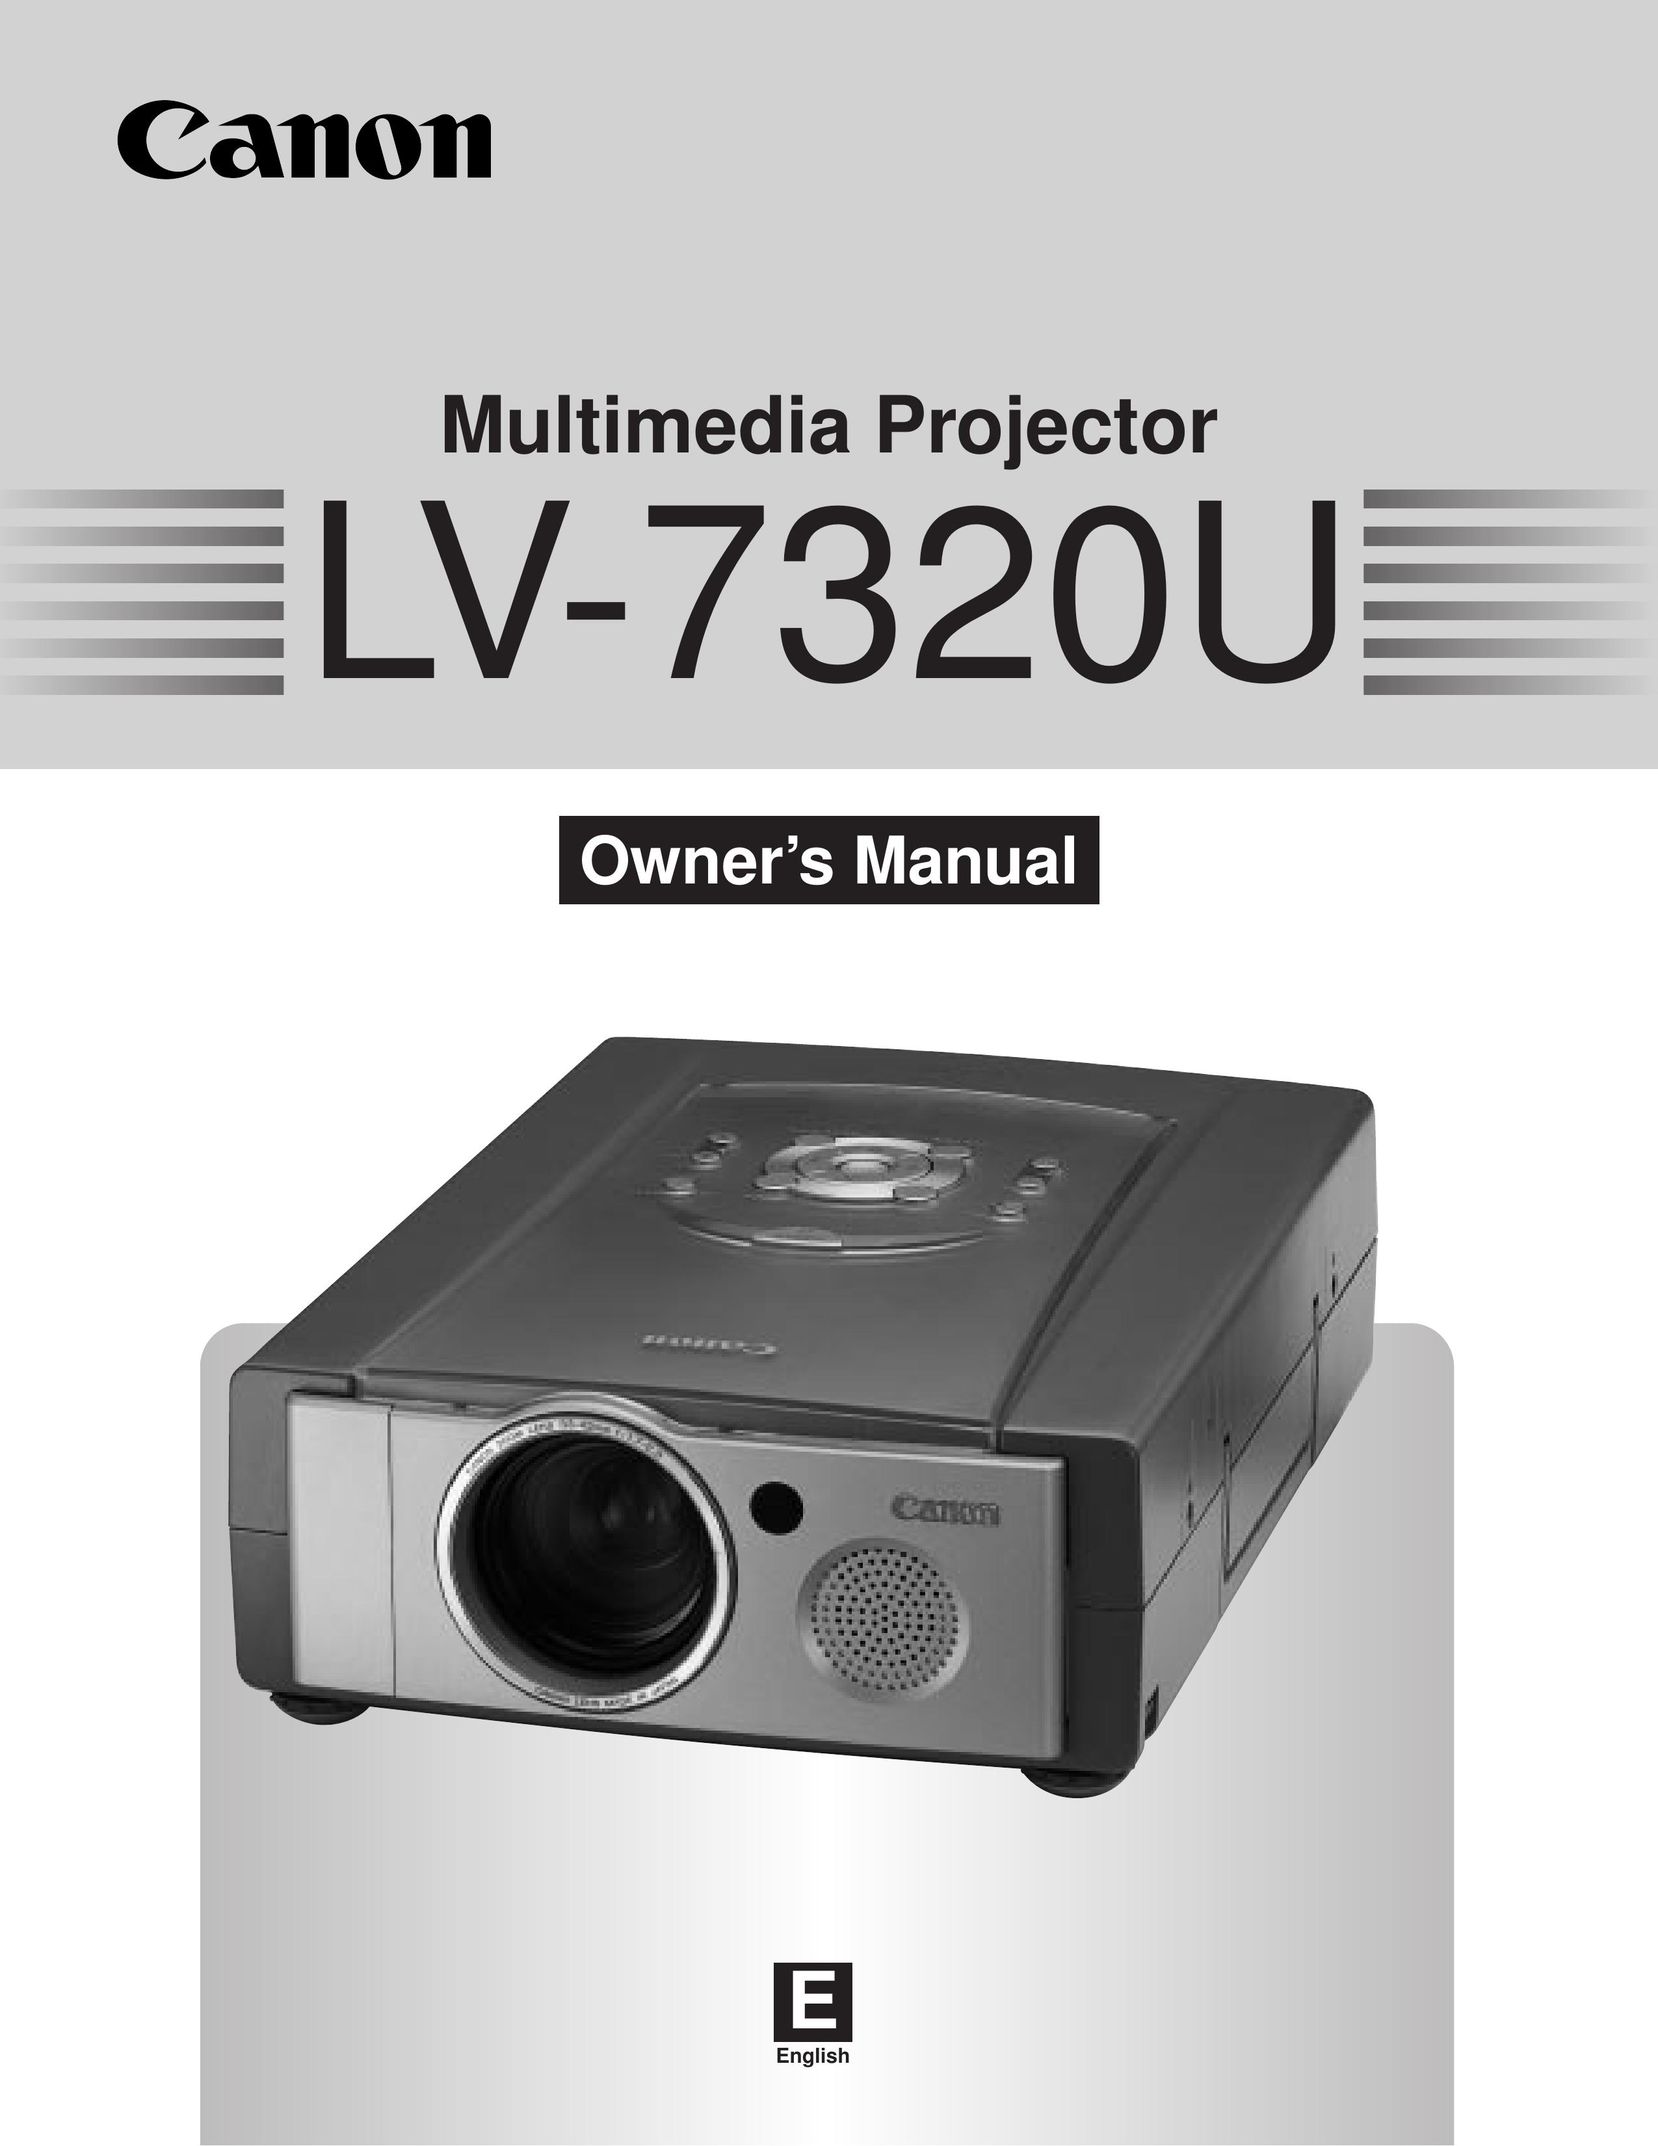 Canon LV-7320U Projector User Manual